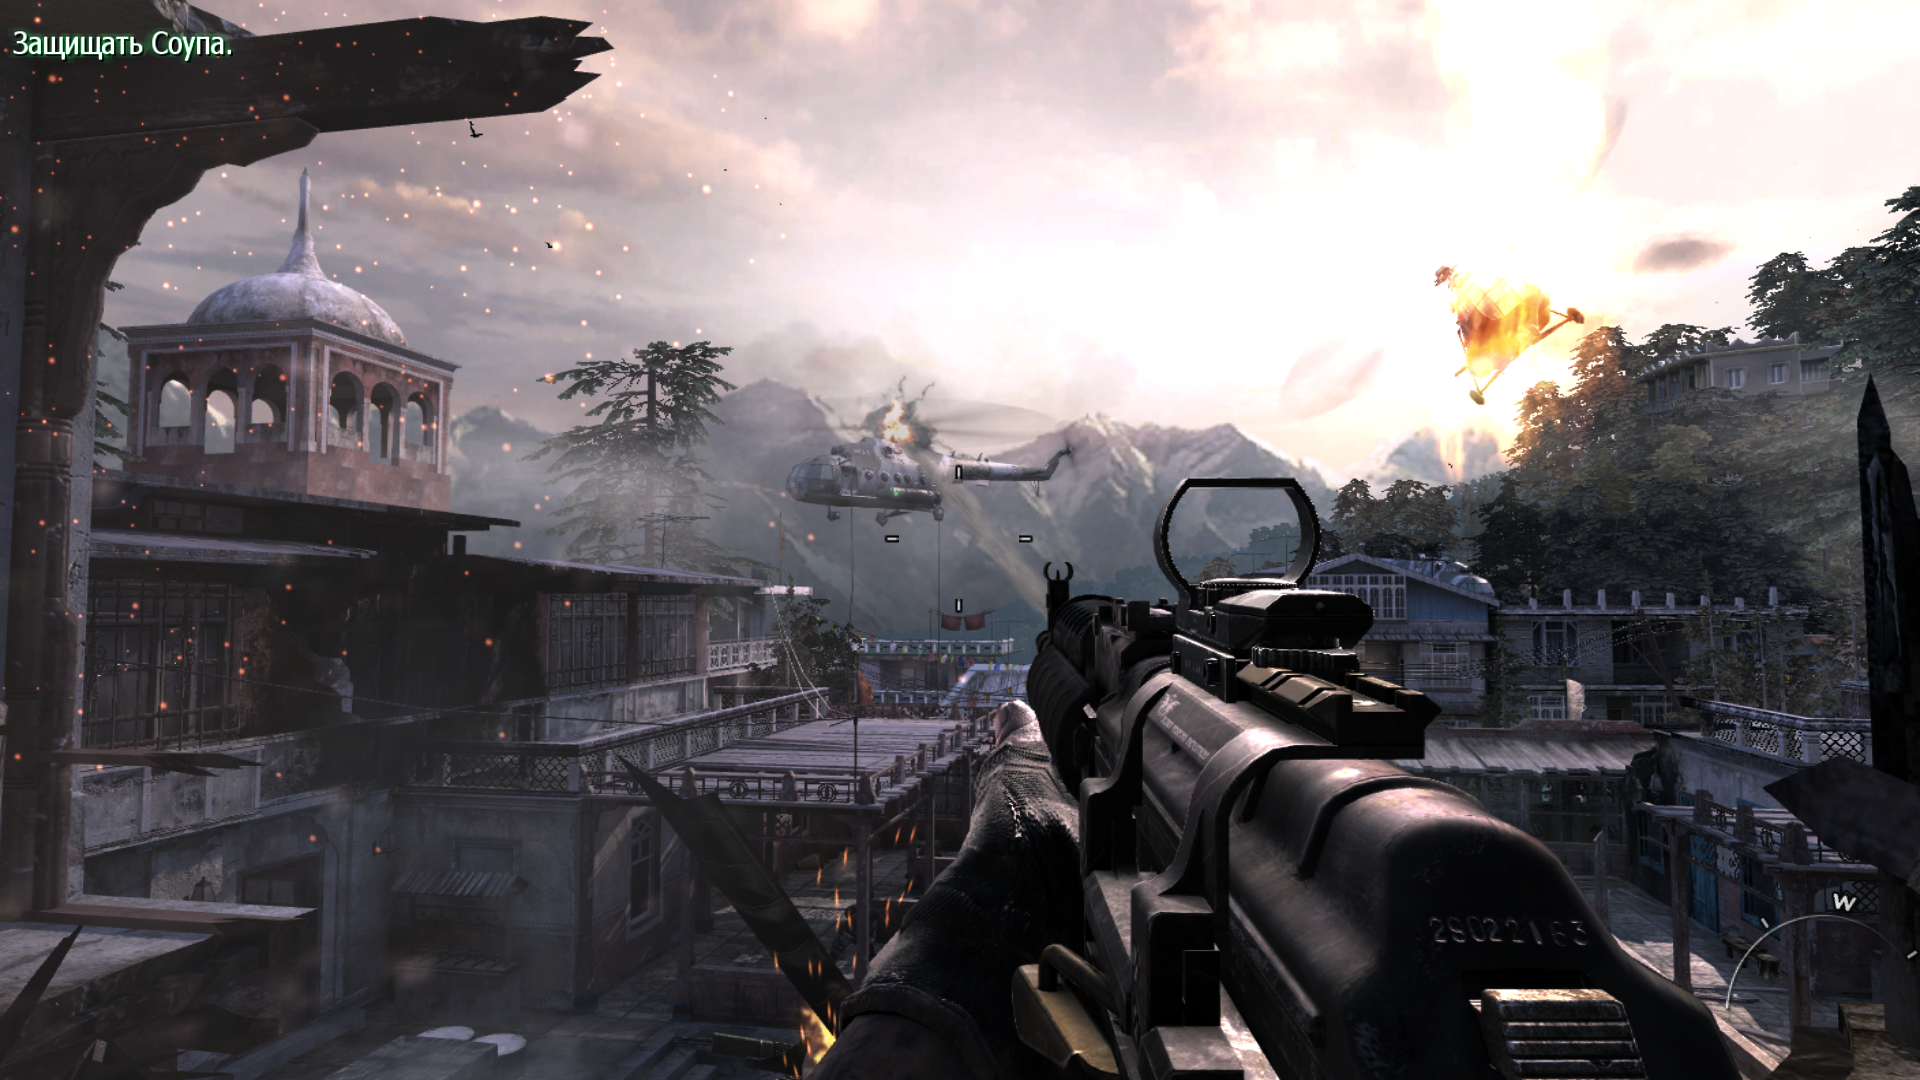 Калов дьюти 1 механики. Call of Duty: Modern Warfare 3. Call of Duty mw3. Калл оф дьюти Модерн варфаре 3. Калл оф дьюти Модерн варфэйр 3.